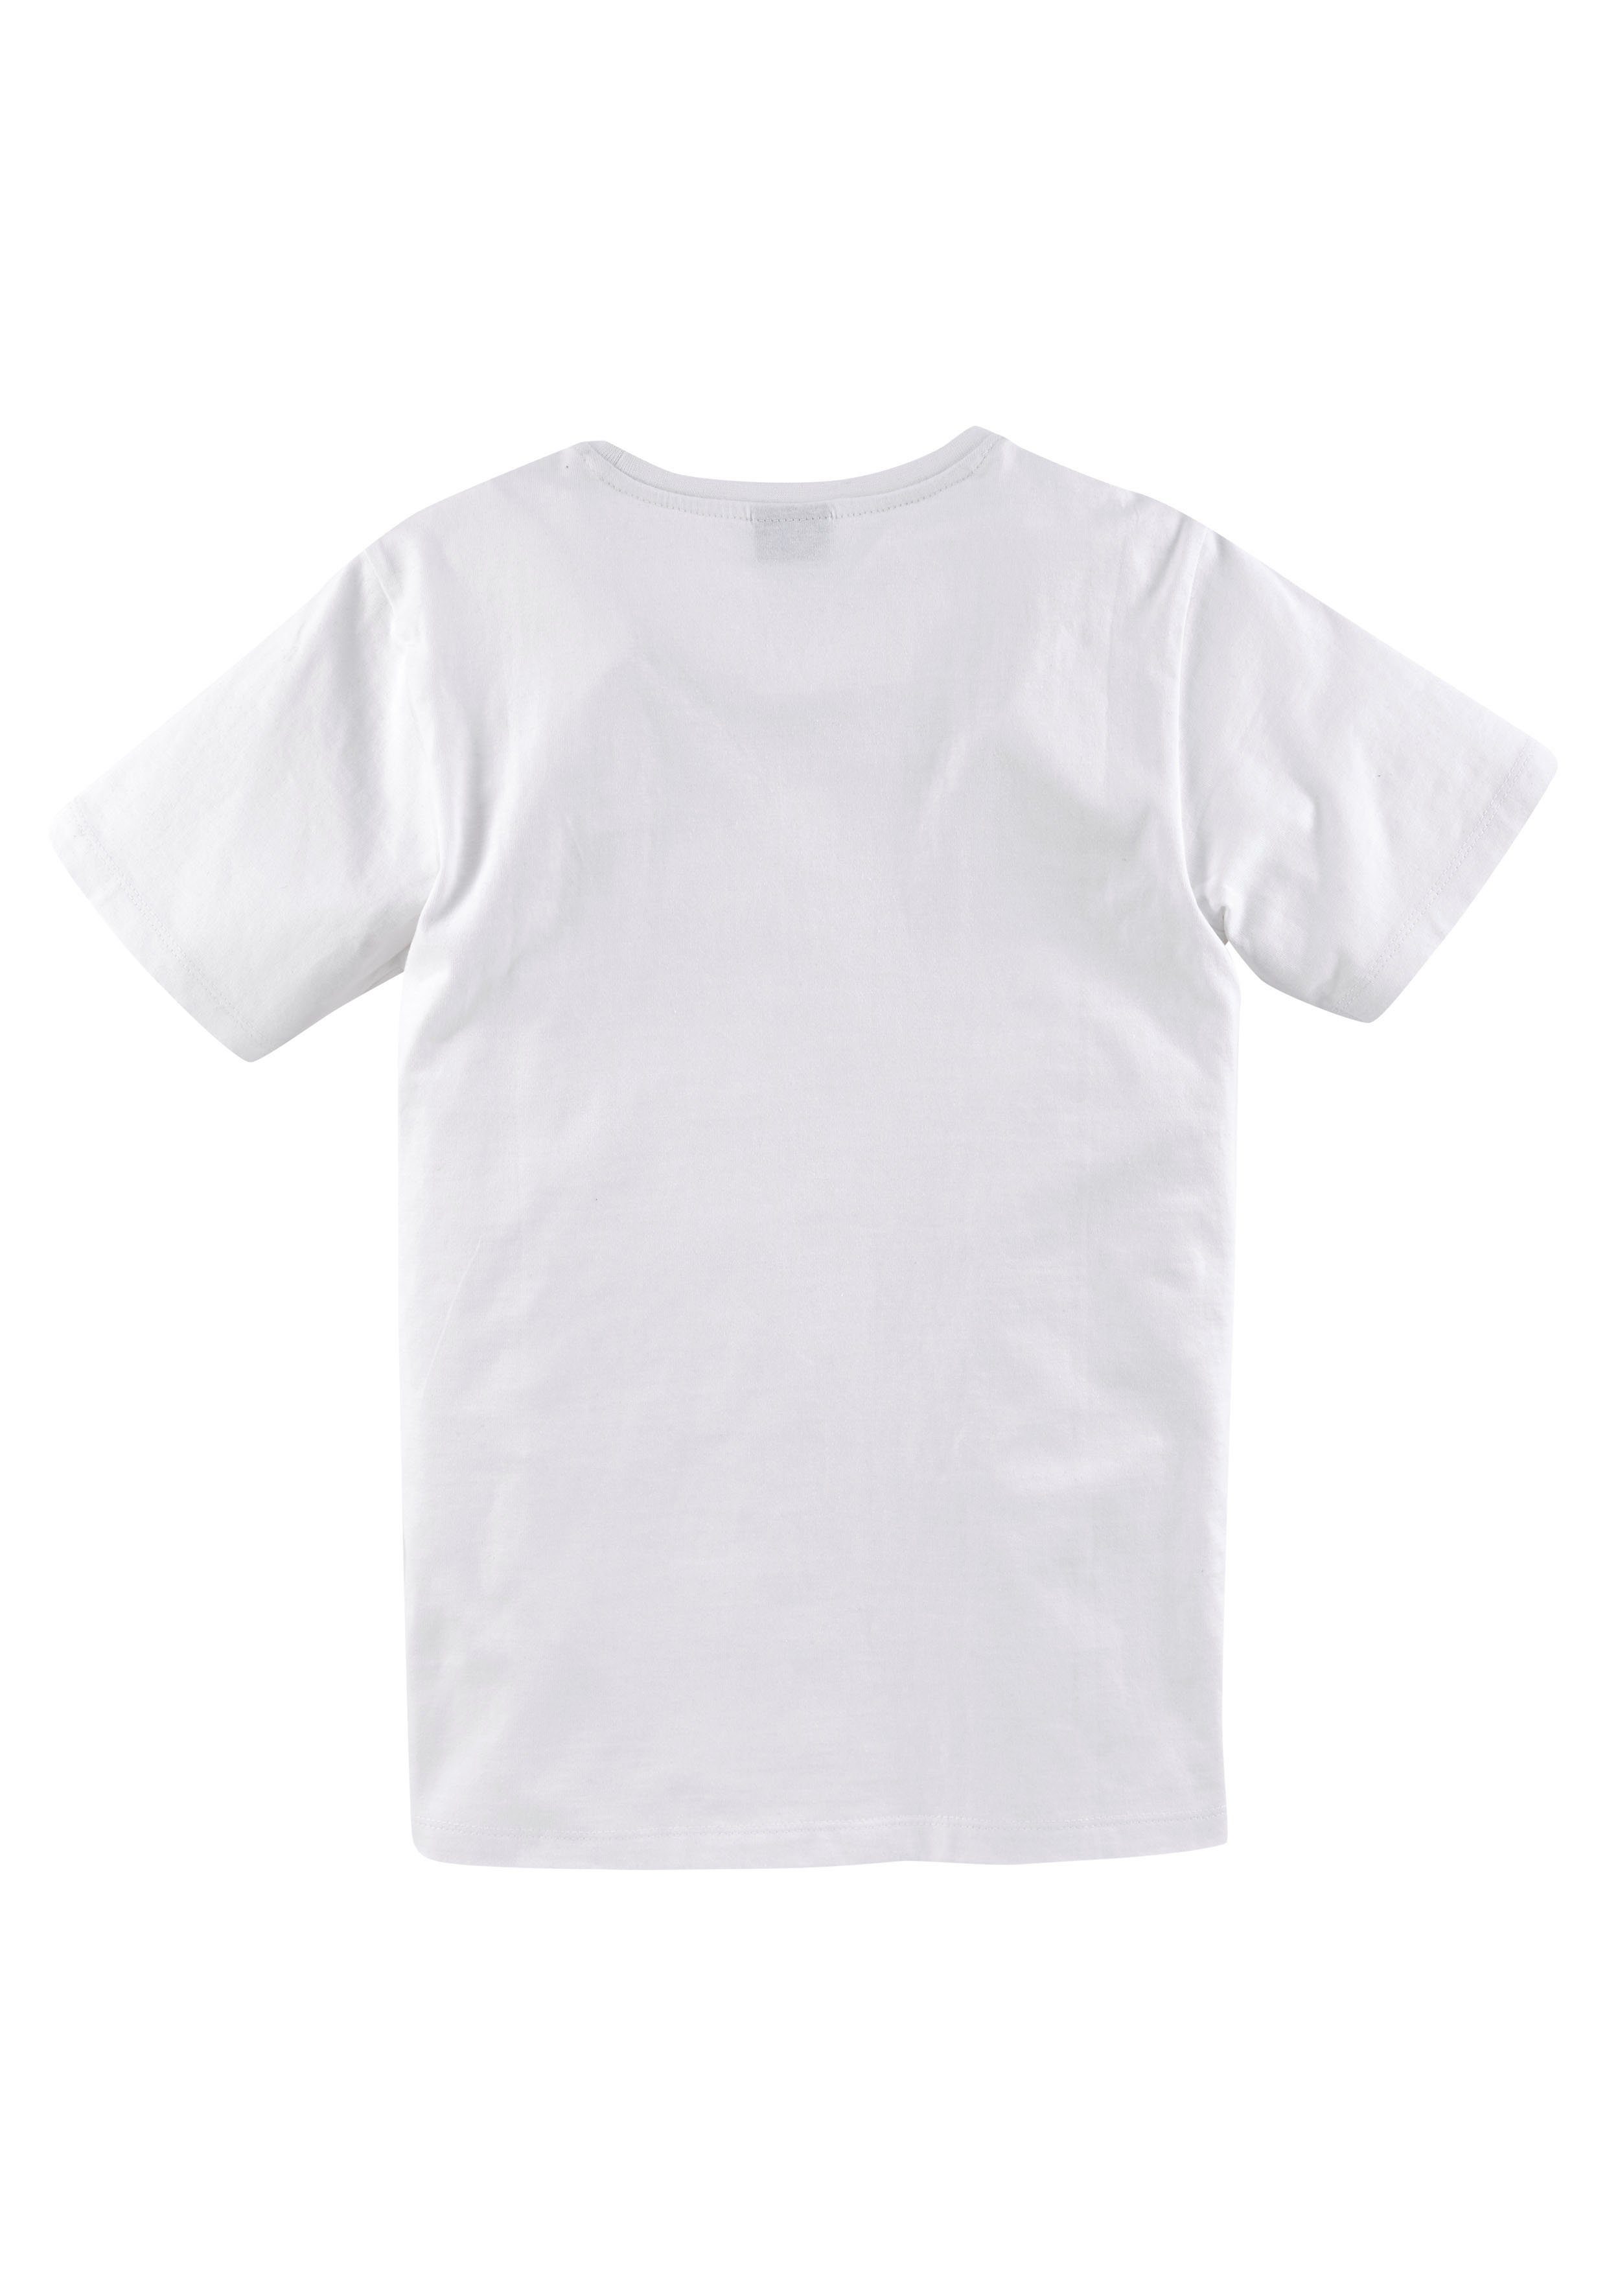 KIDSWORLD T-Shirt GAMING Spruch ZONE